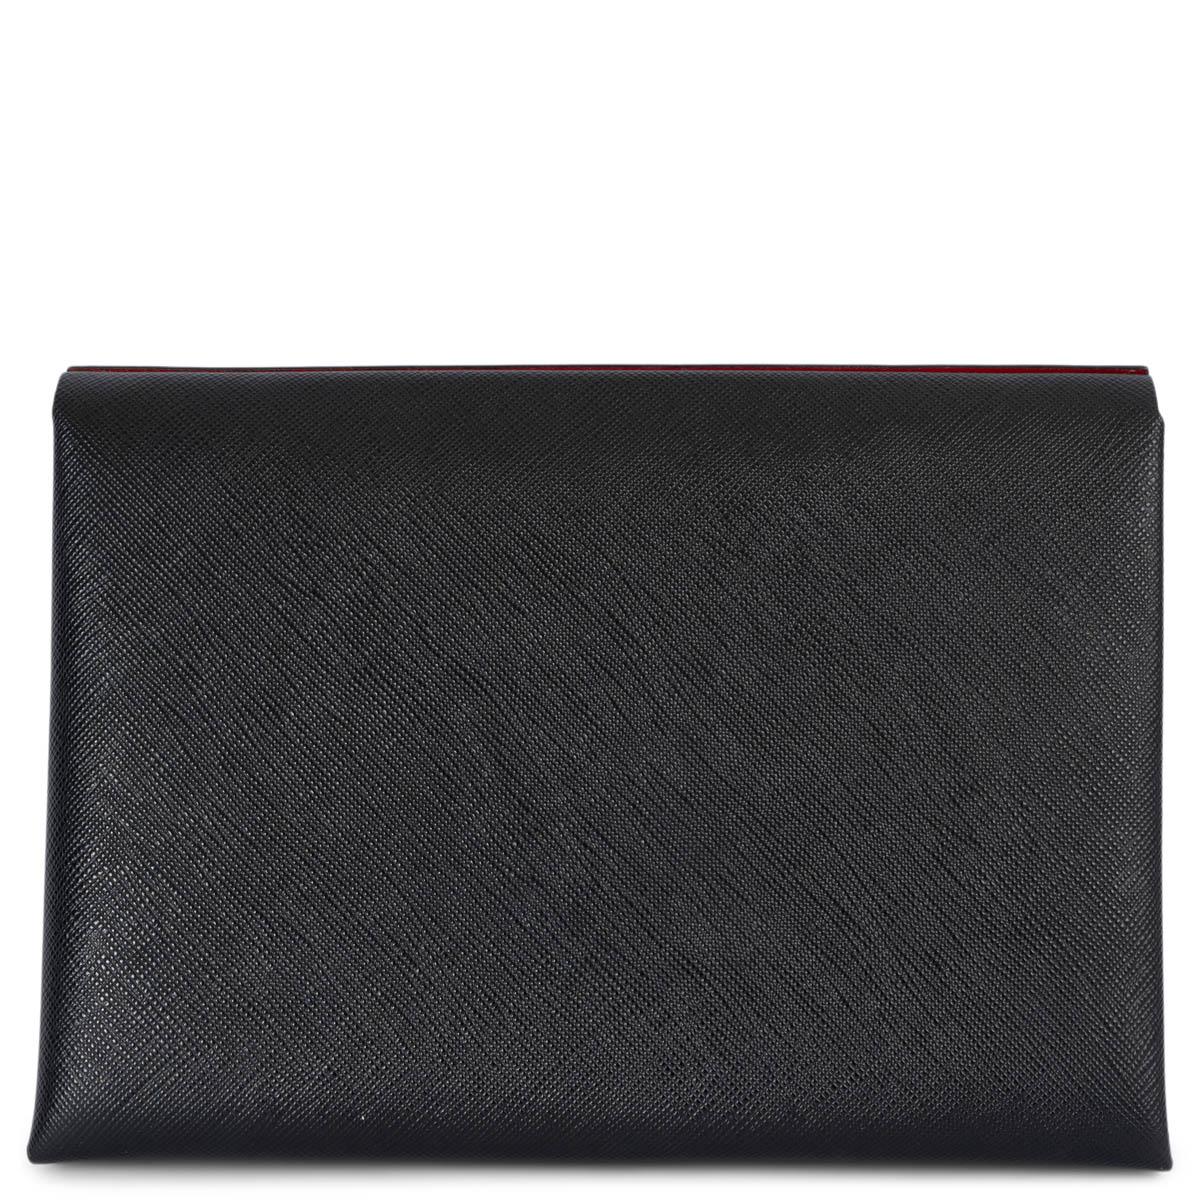 PRADA black / red Saffiano leather SMALL DOCUMENT PORTFOLIO Pouch Bag In Excellent Condition For Sale In Zürich, CH